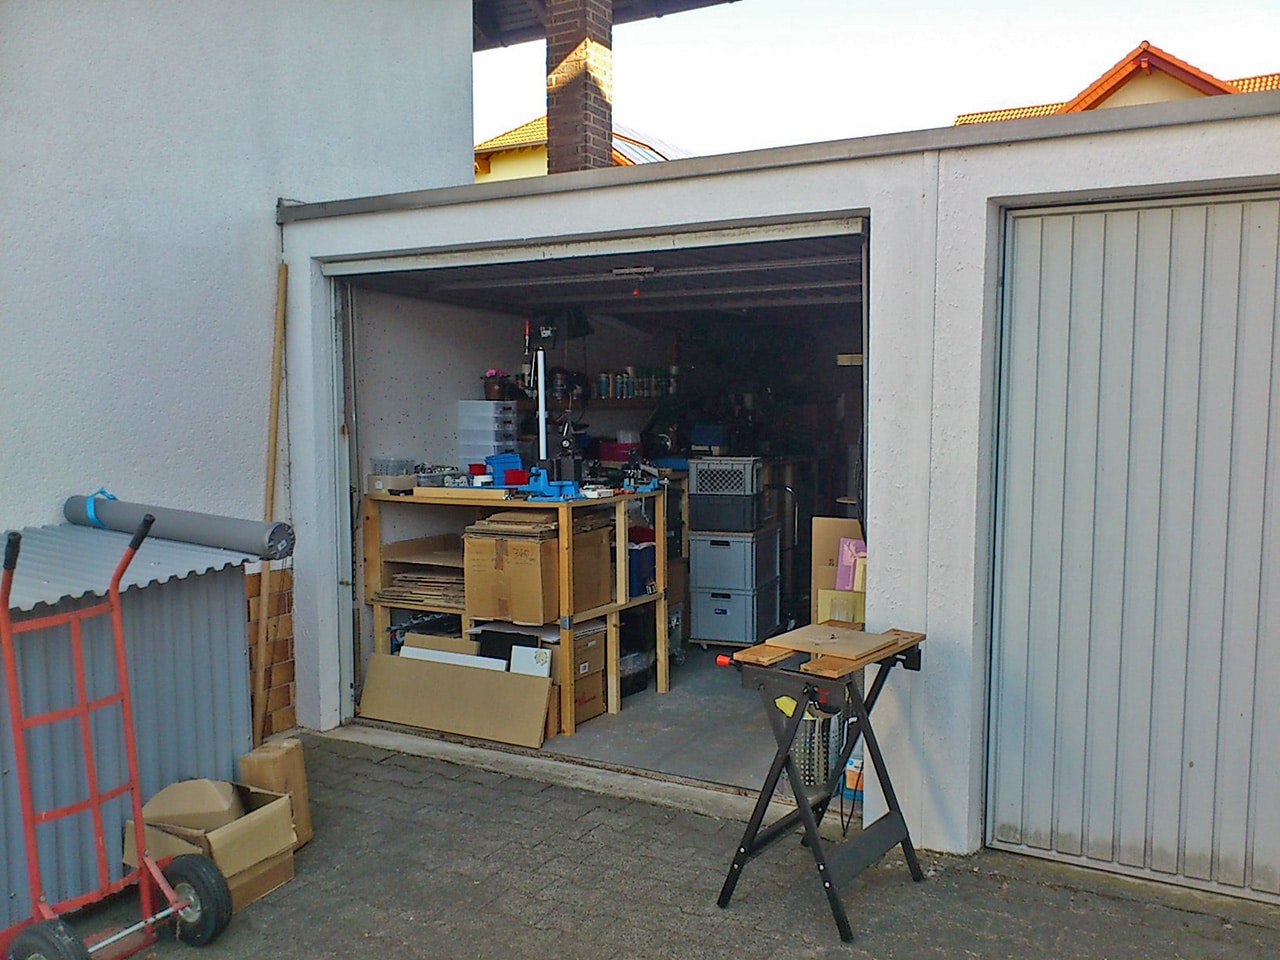 First slackPro! headquarters – Andy’s garage 2013